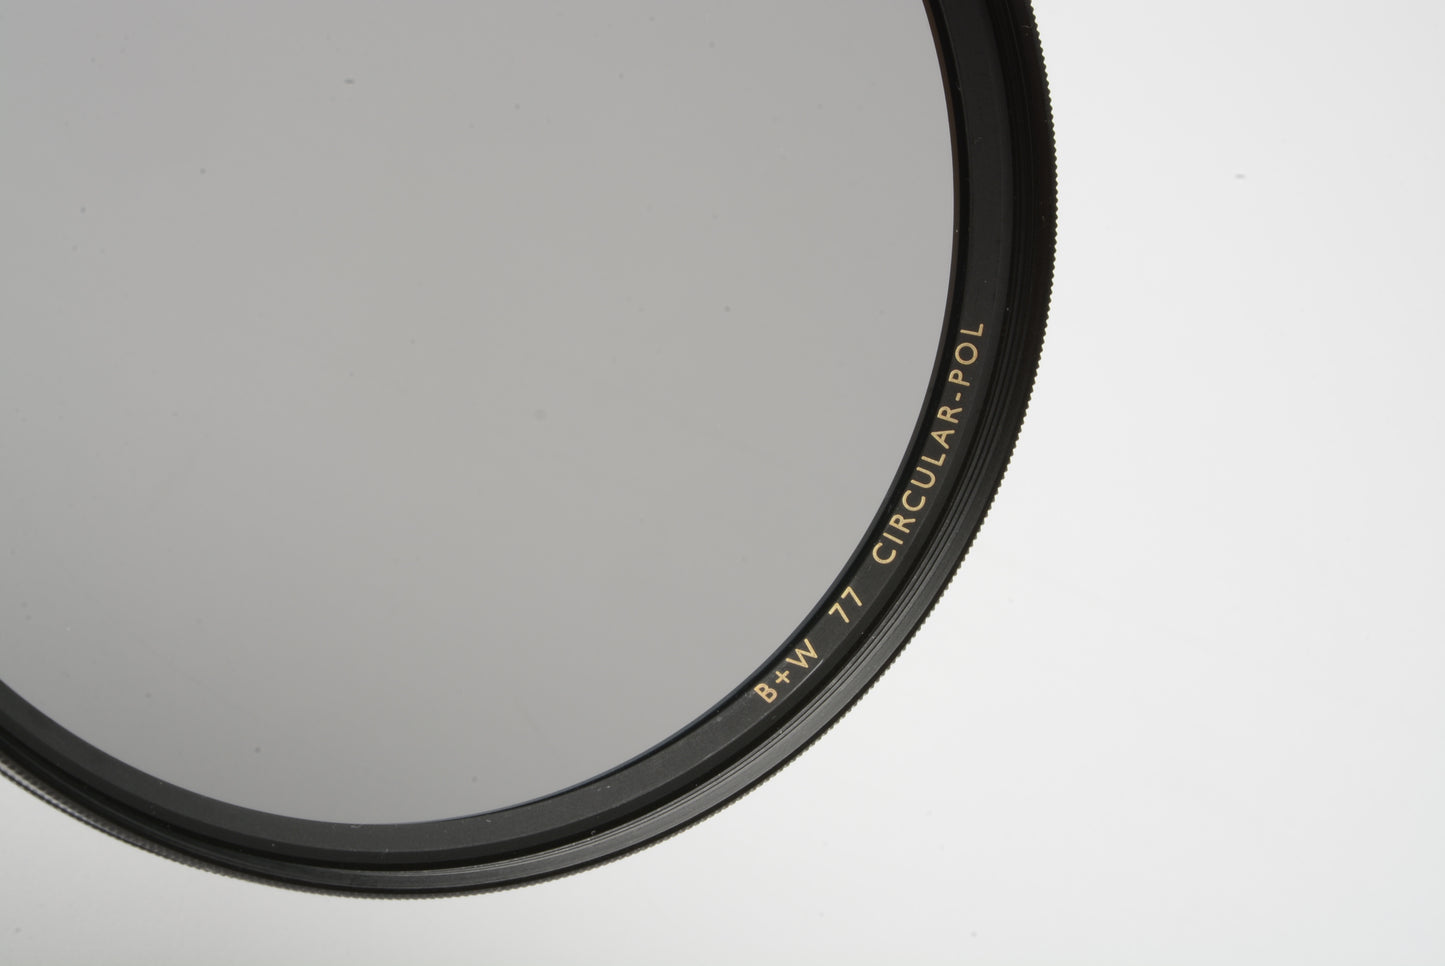 B+W 77mm F-Pro Circular Polarizing Circular-Pol Filter in jewel case, clean